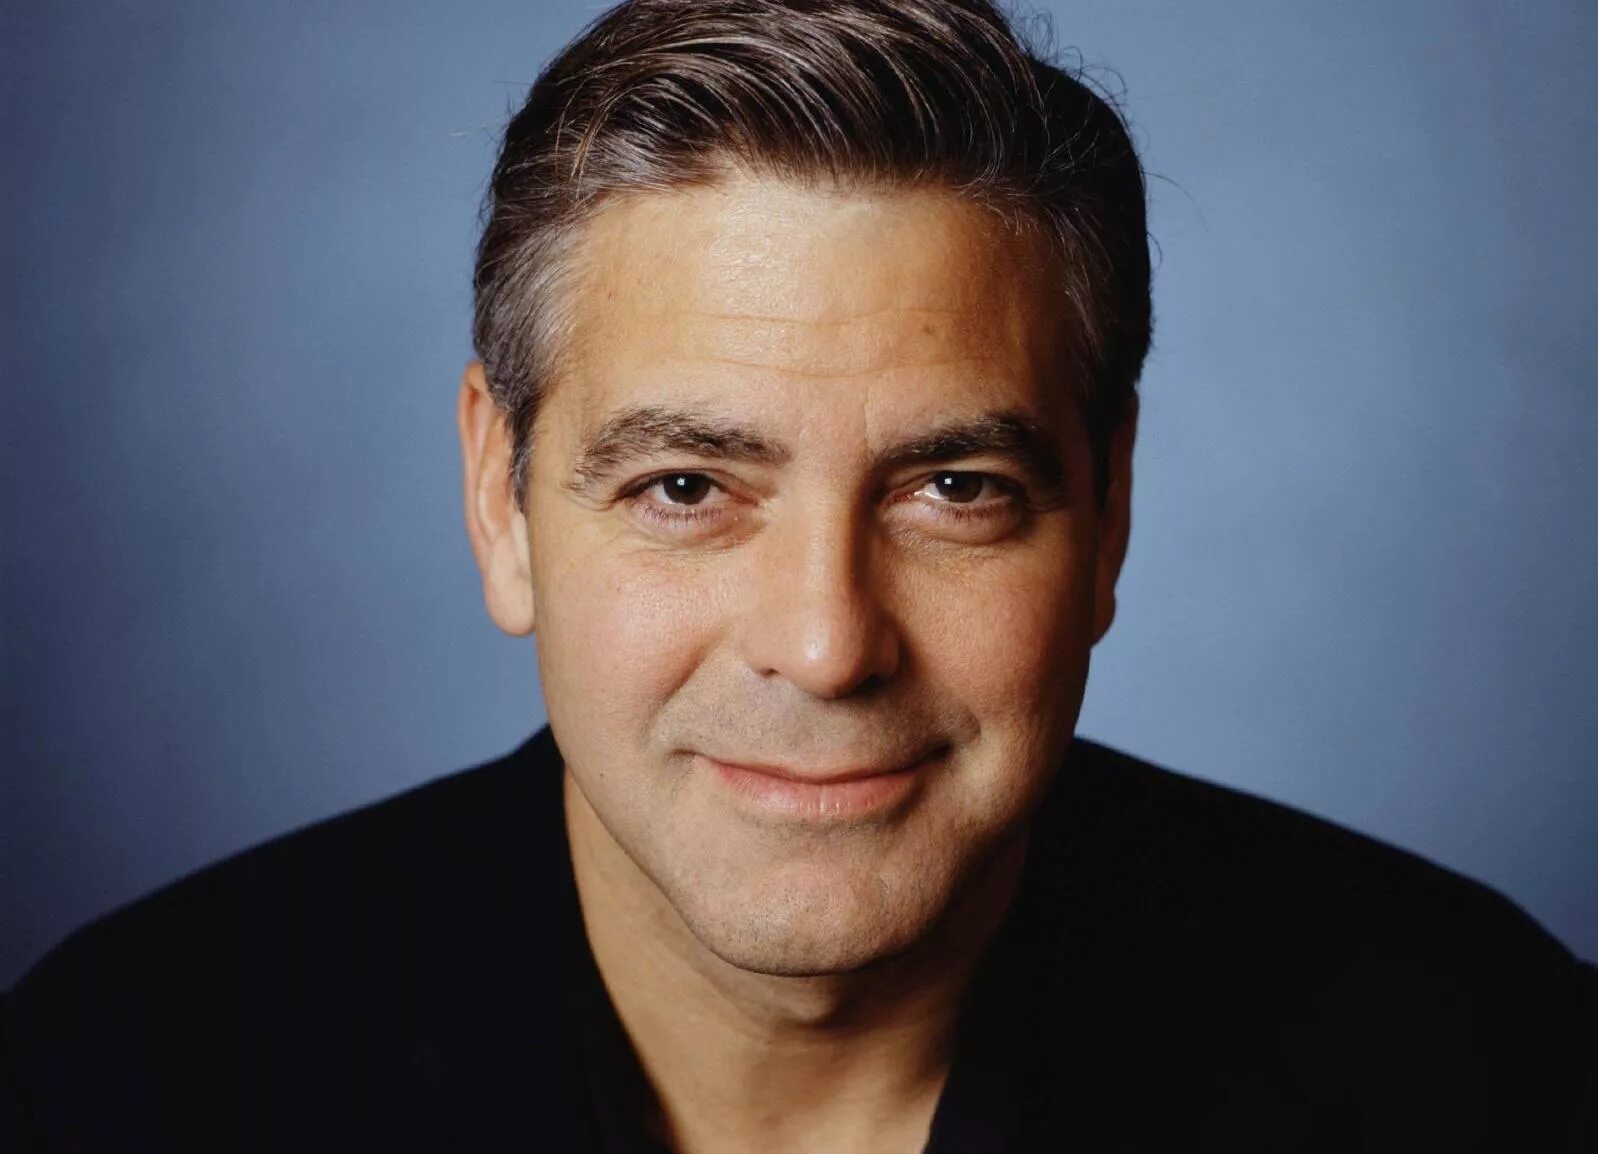 Самого знаменитого артиста. Джордж Клуни фото. Джордж Клуни 1997. Джордж Клуни молодой. Джордж Клуни зубы.